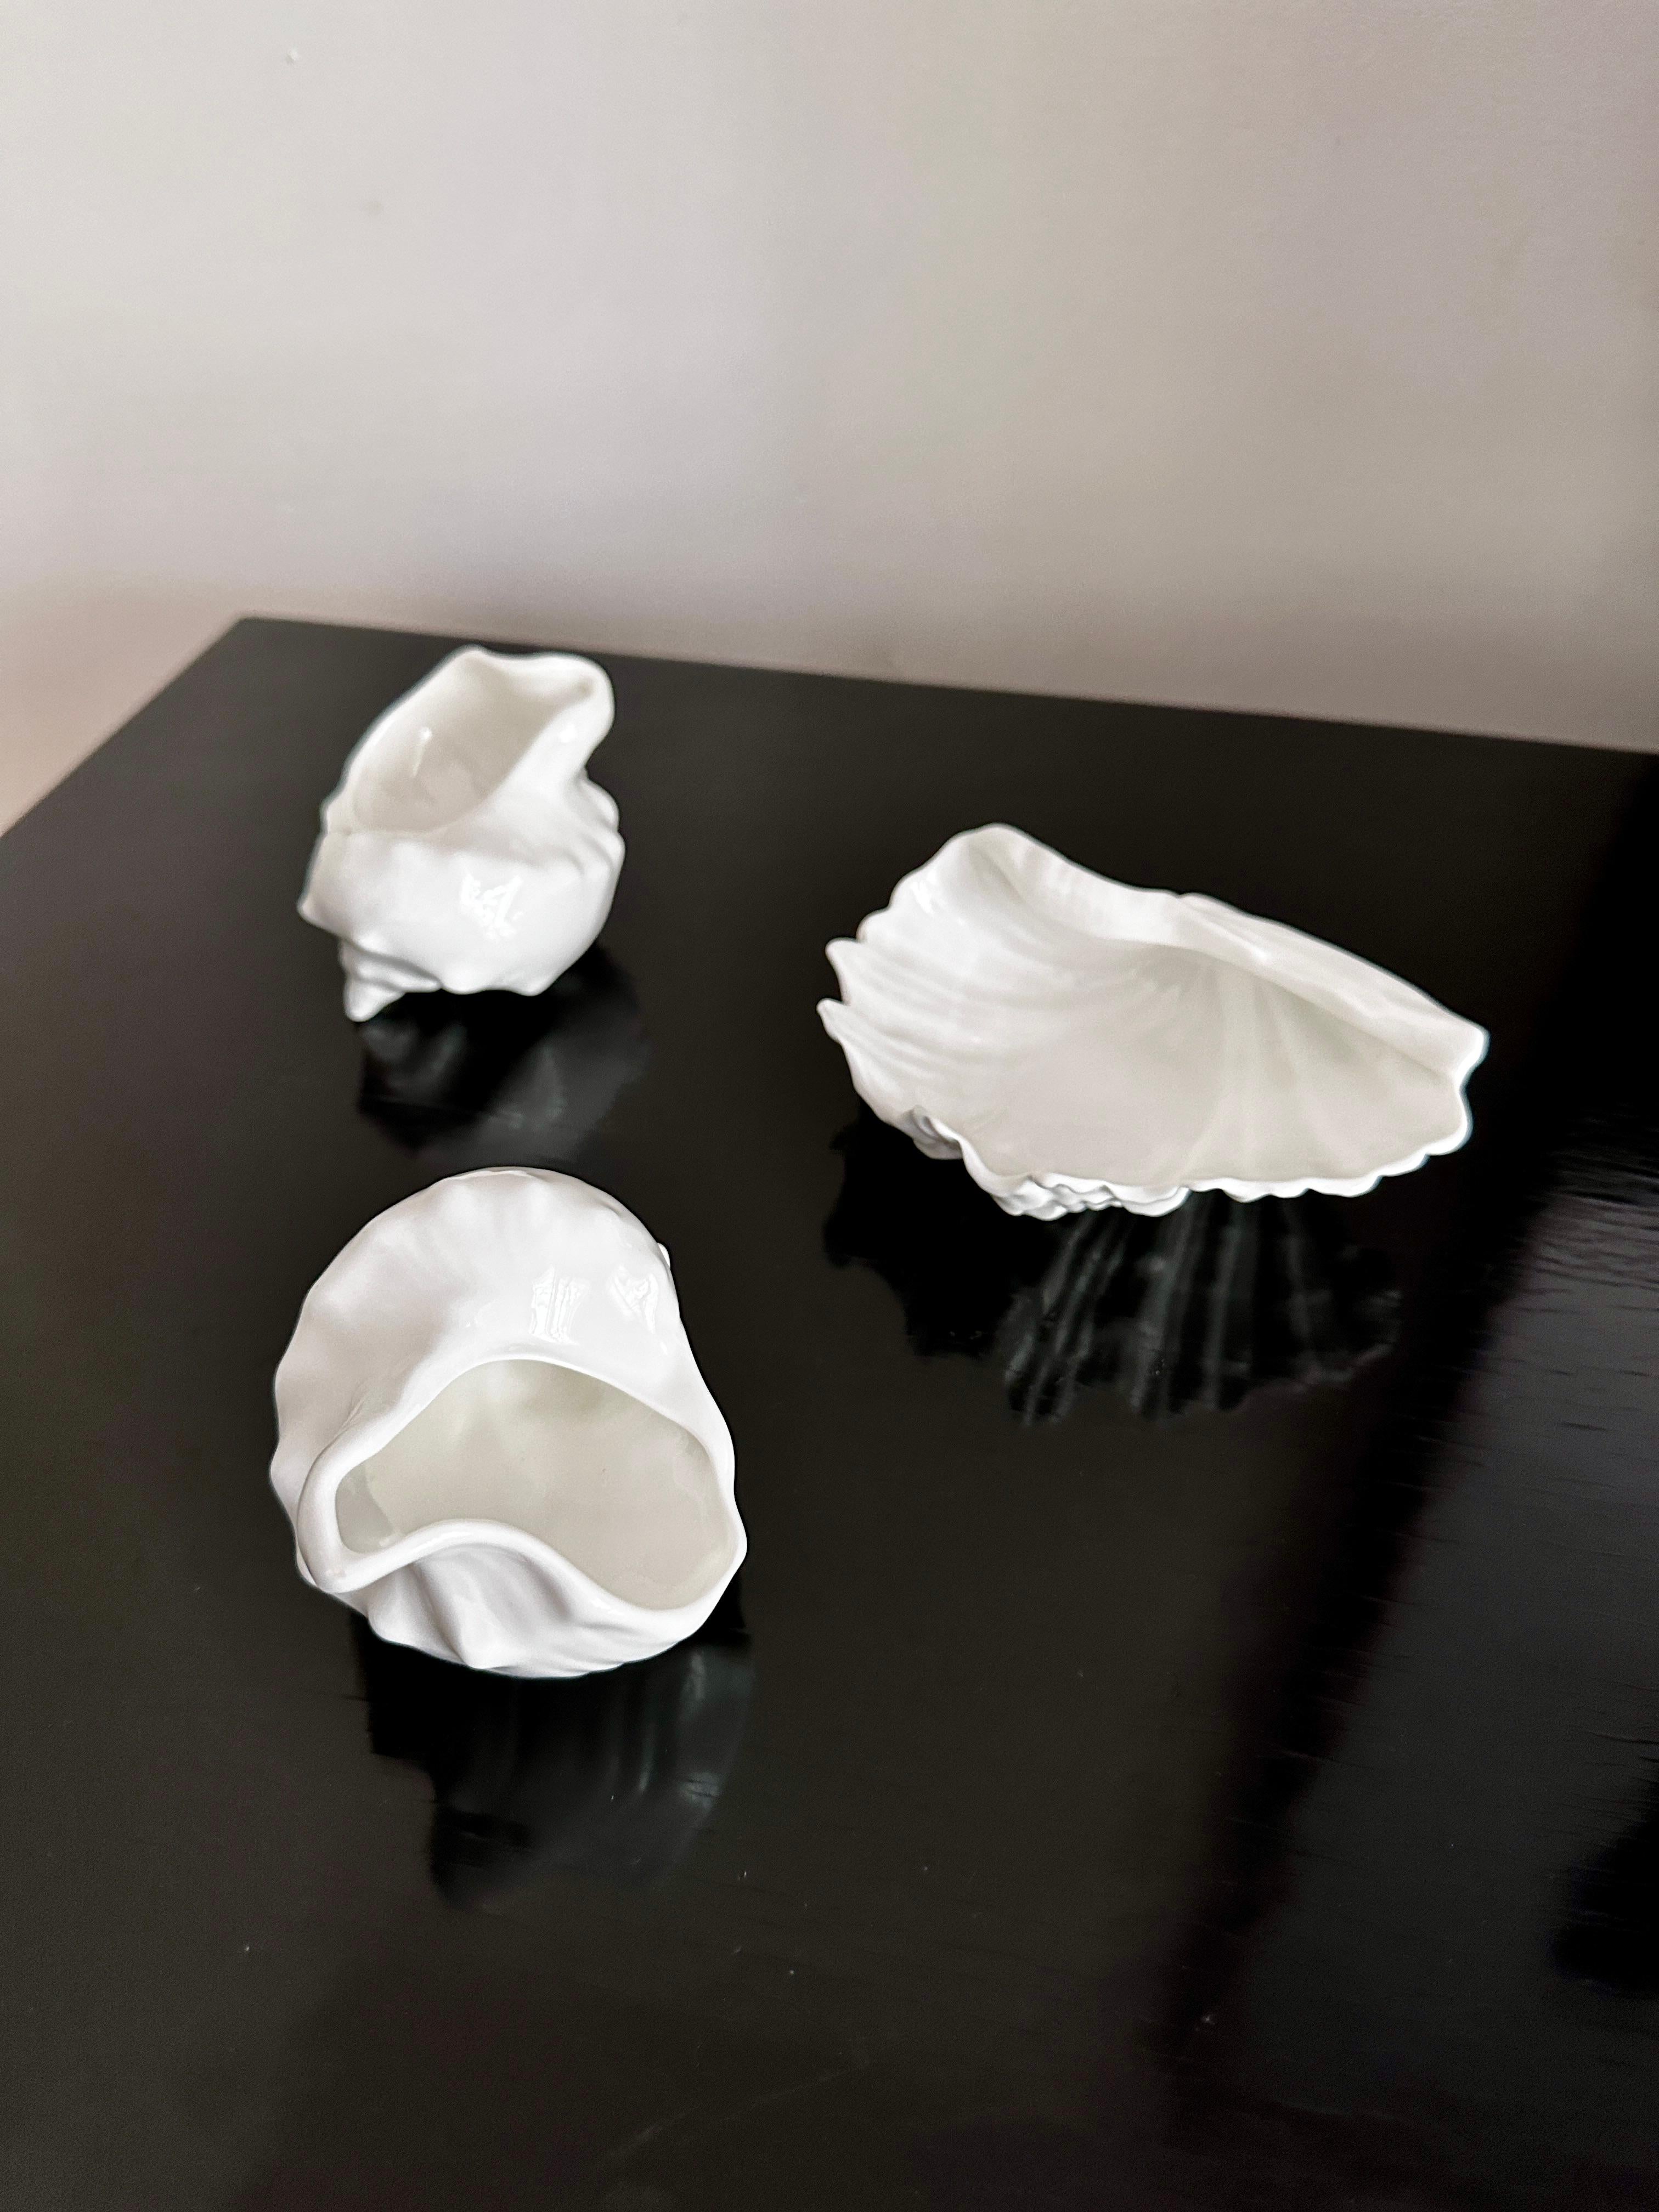 Three beautiful bone china gloss white glazed shells by Wedgwood. The shell designs were part of the 